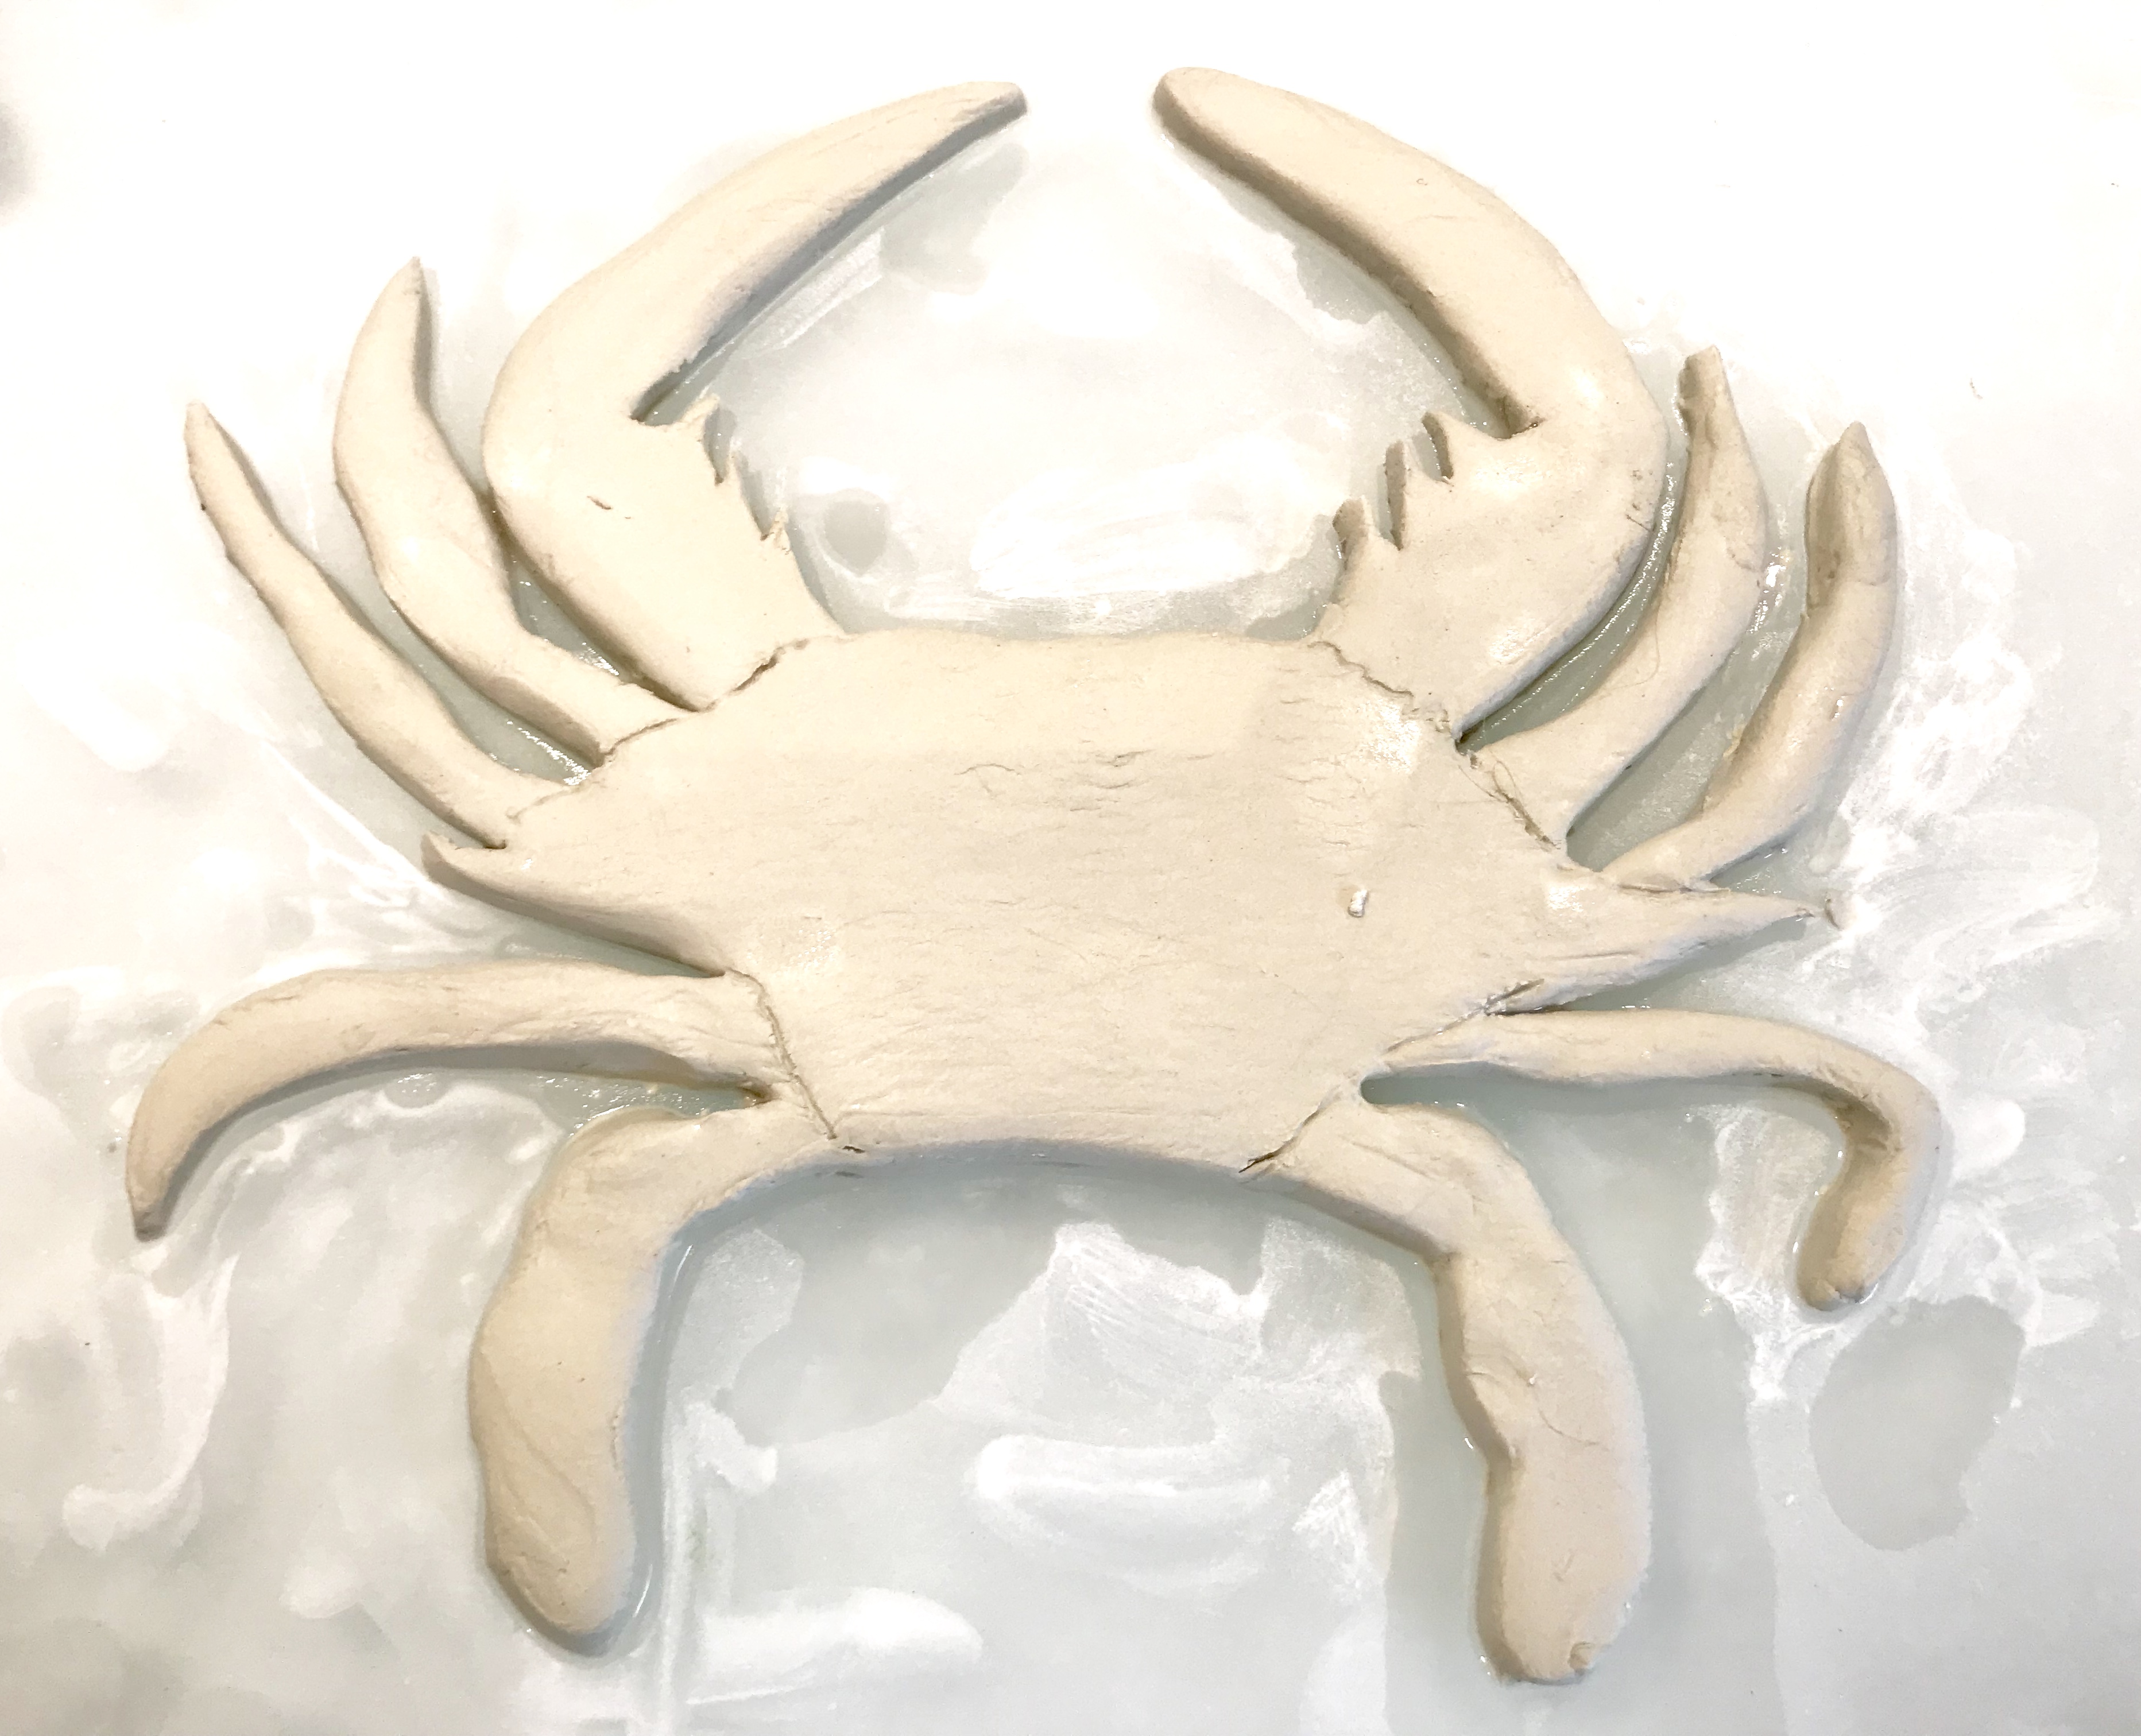 Krabben aus Modelliermasse; Maritime Deko aus lufttrocknemdem Ton basteln, Sommerdeko selber machen; #Chalet8, #Krabben